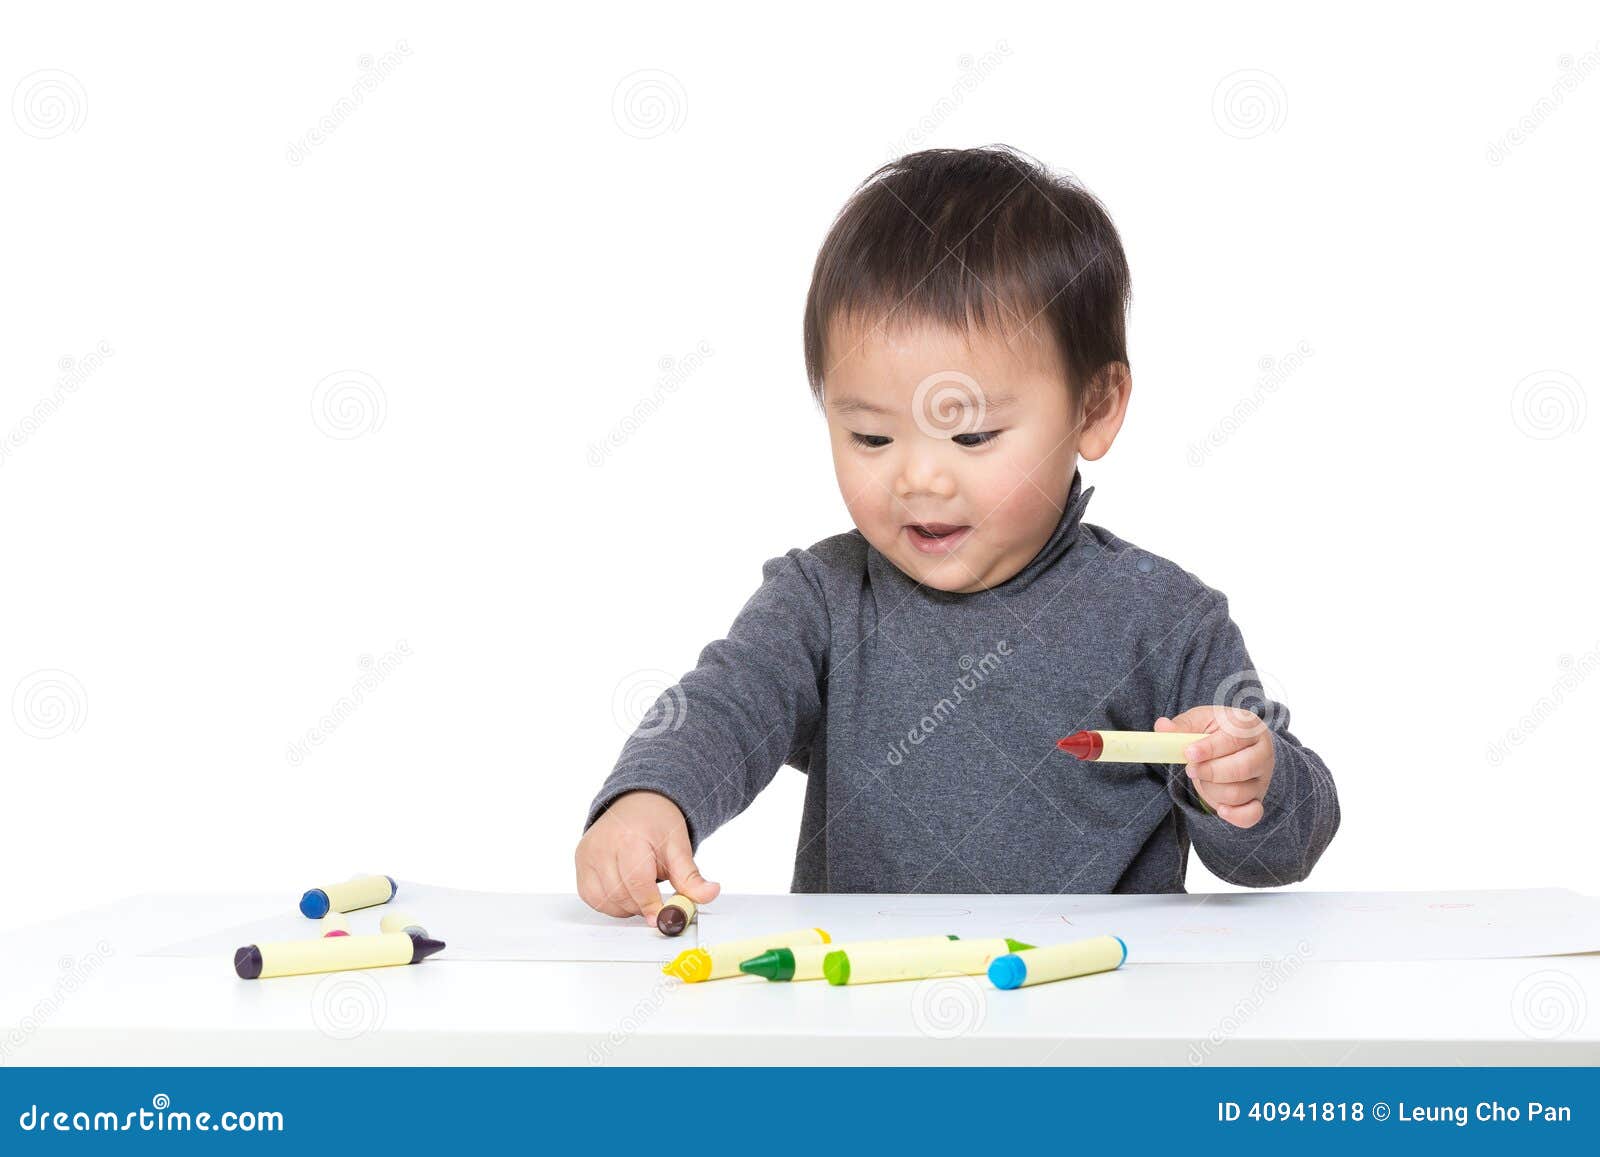 574 Asian Toddler Paint Stock Photos - Free & Royalty-Free Stock